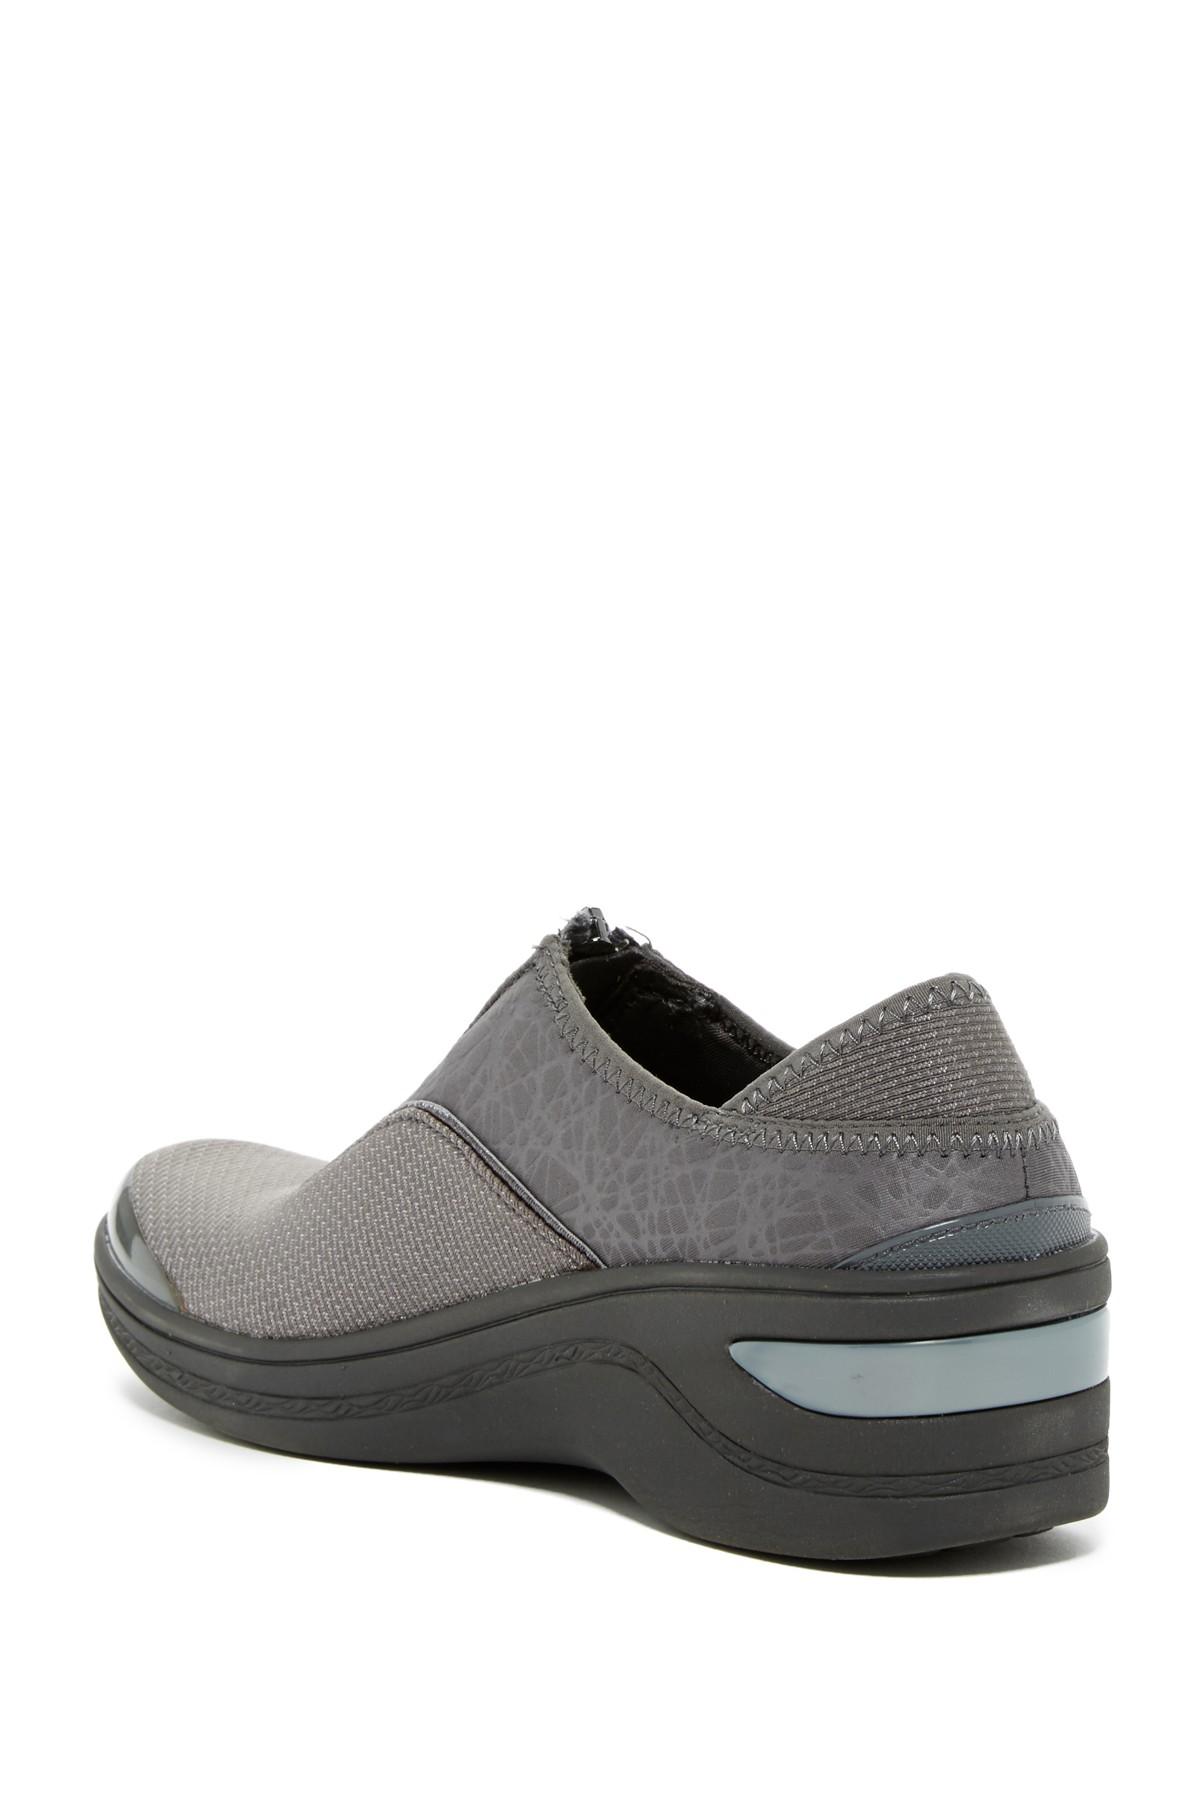 Bzees Diva Sneaker - Wide Width Available in dk Grey (Gray) - Lyst